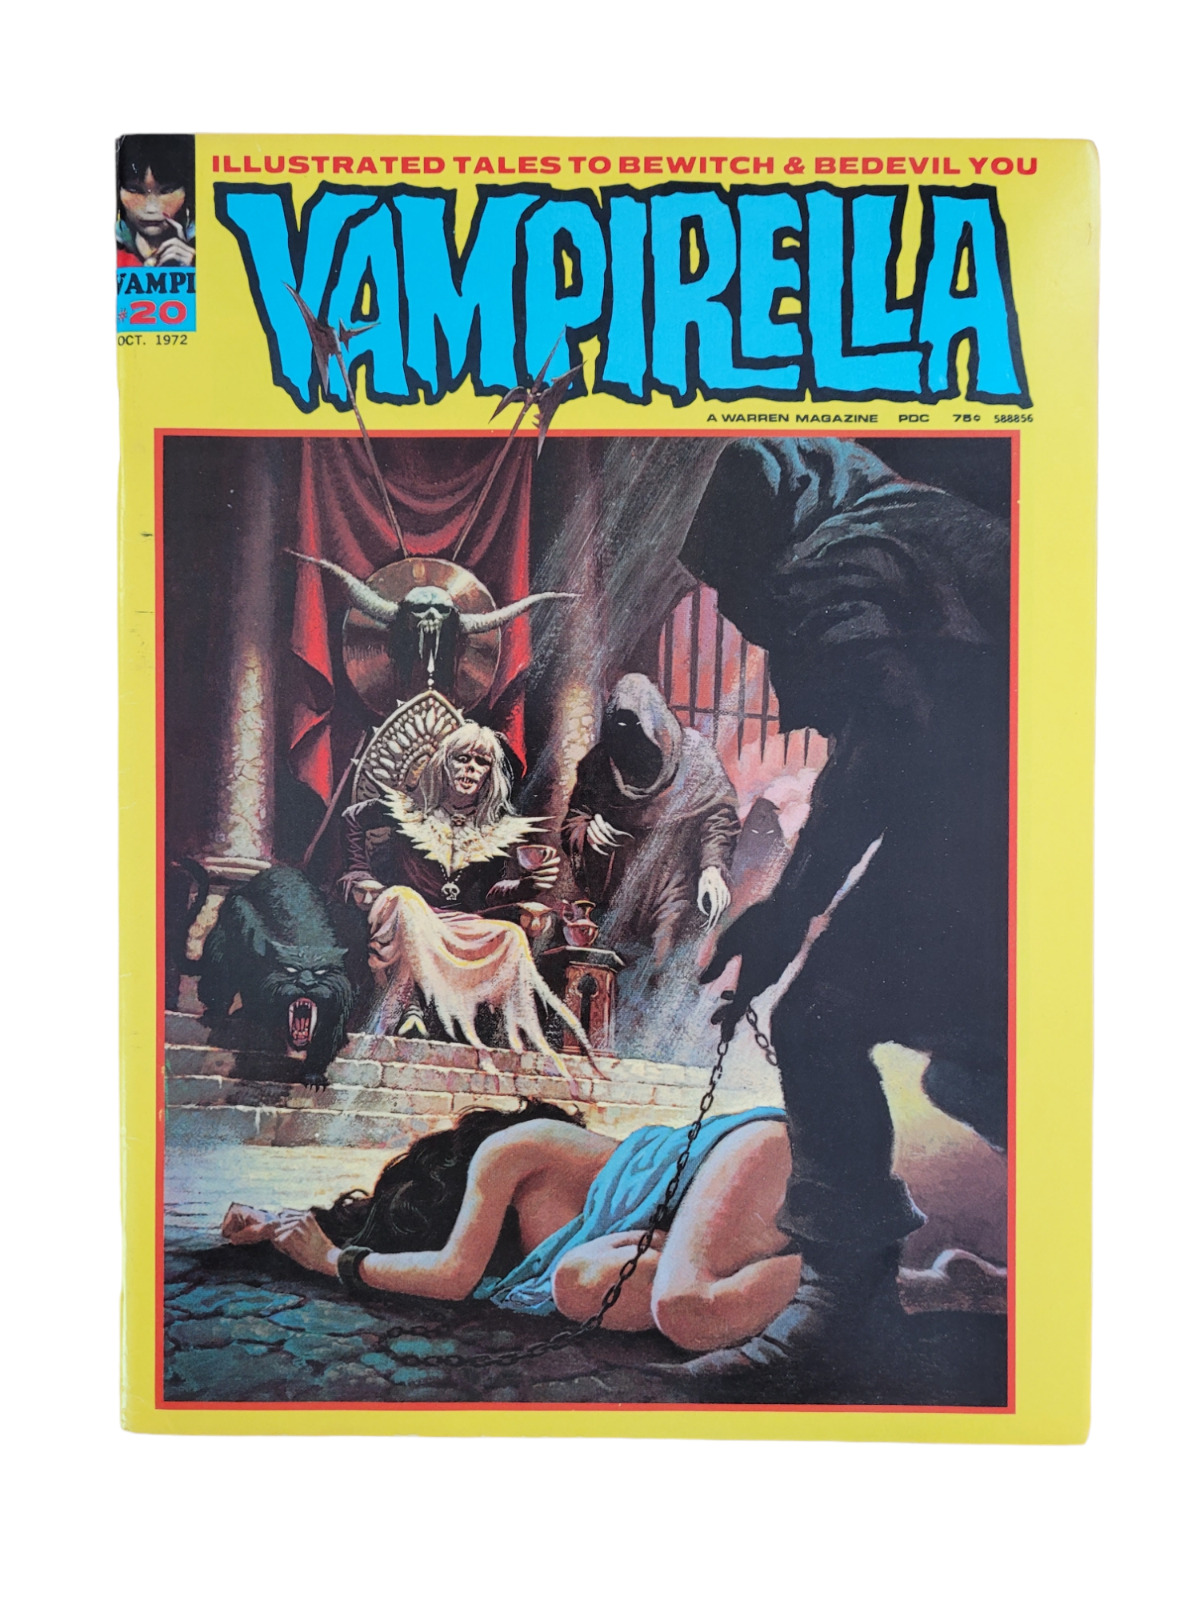 Vampirella #20 Warren Magazine Oct. 1972 Sharp Copy Science Fiction Horror